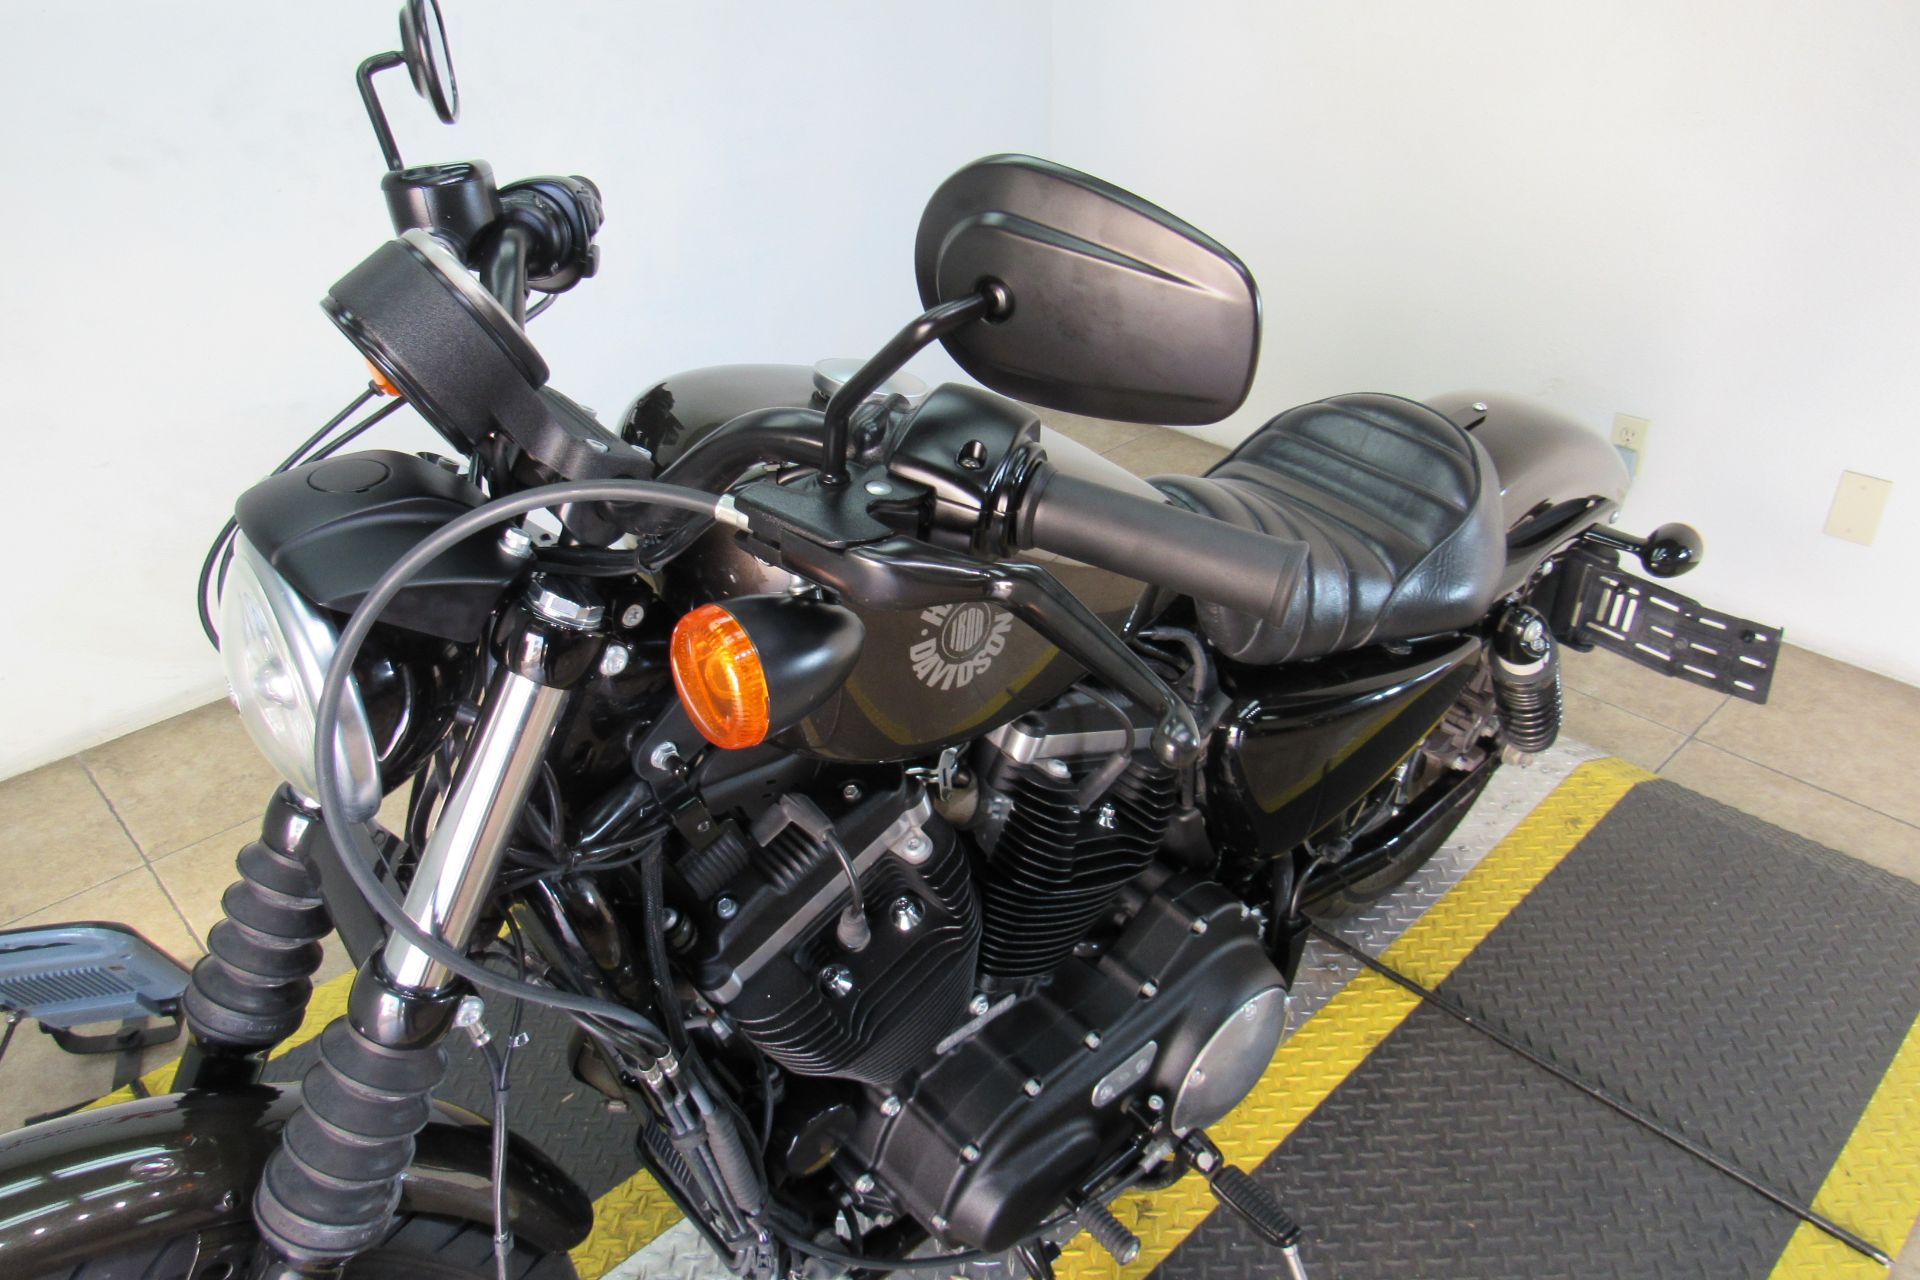 2020 Harley-Davidson Iron 883™ in Temecula, California - Photo 22